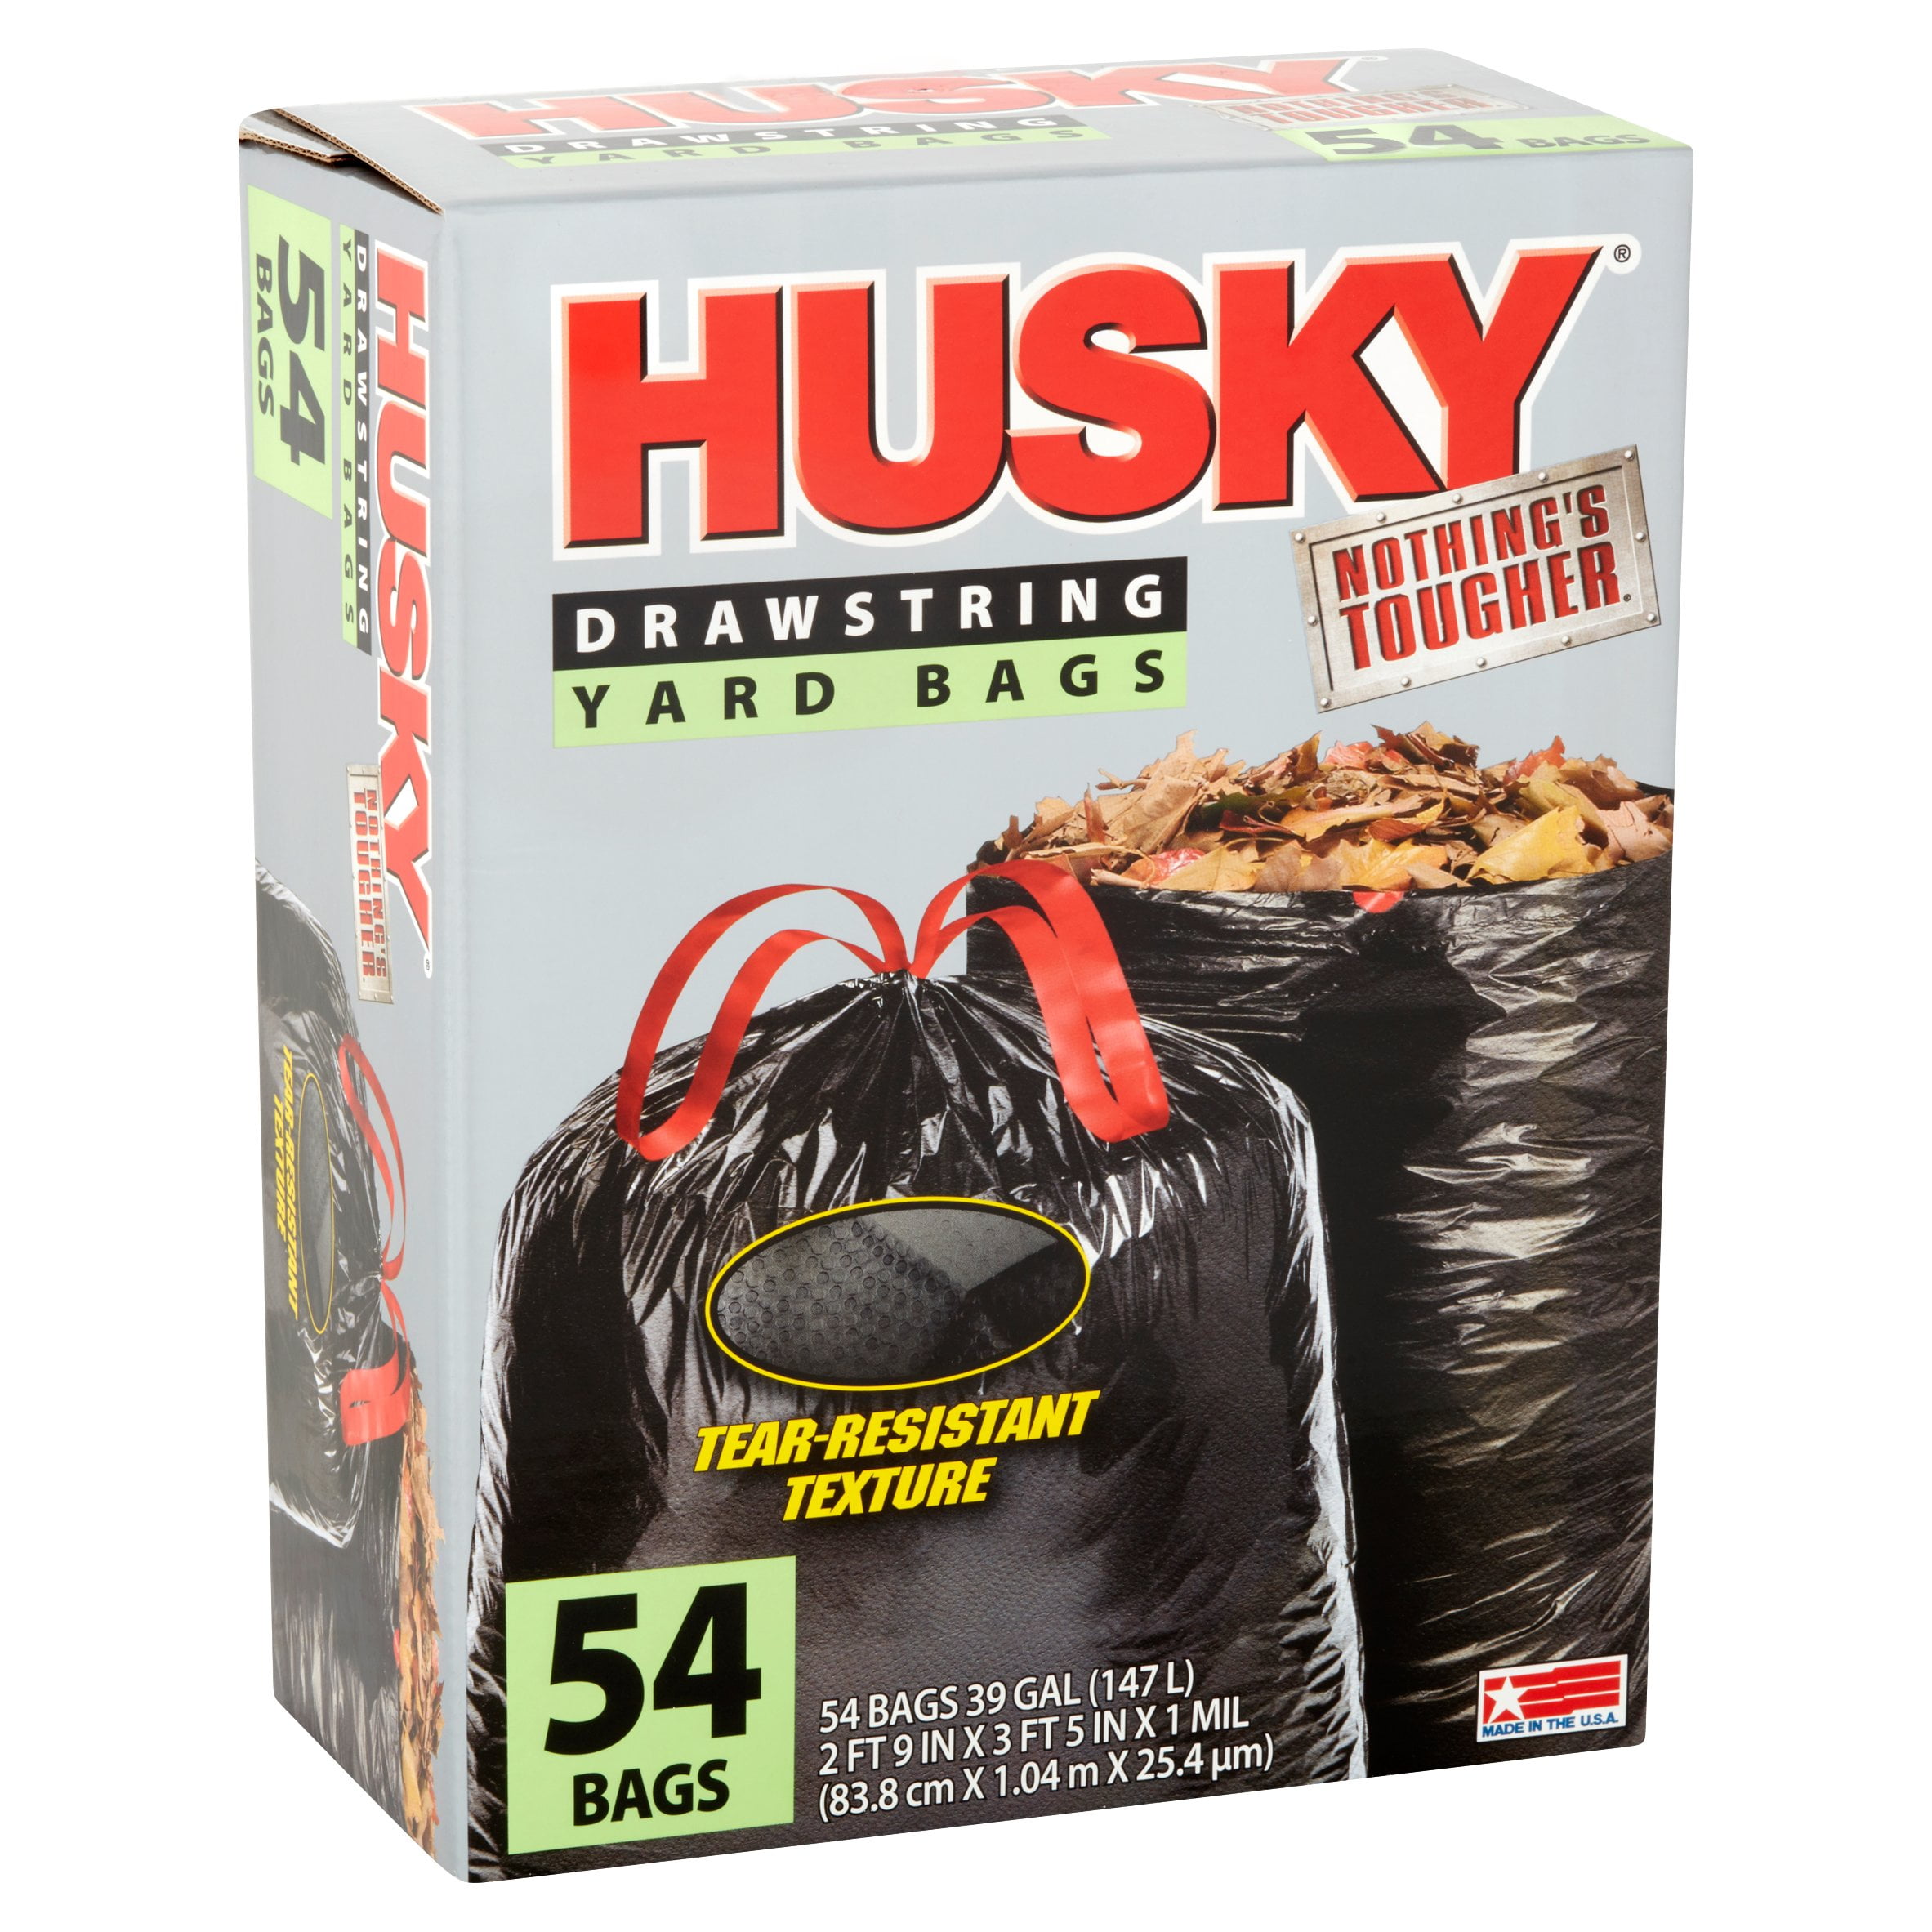 Husky Drawstring Yard Bags 54 count 39 gal 